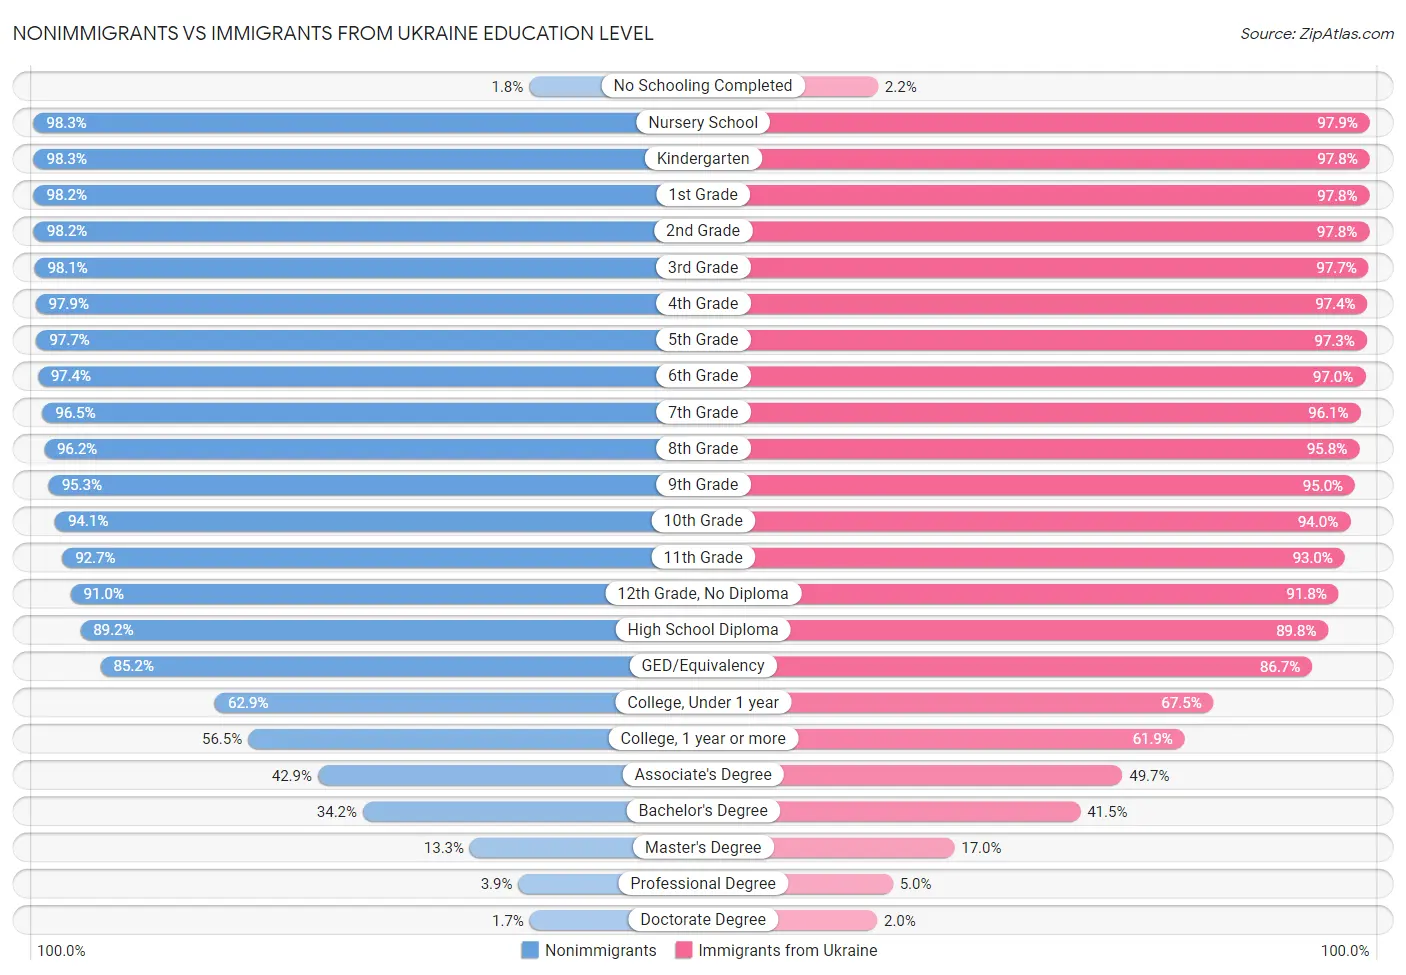 Nonimmigrants vs Immigrants from Ukraine Education Level